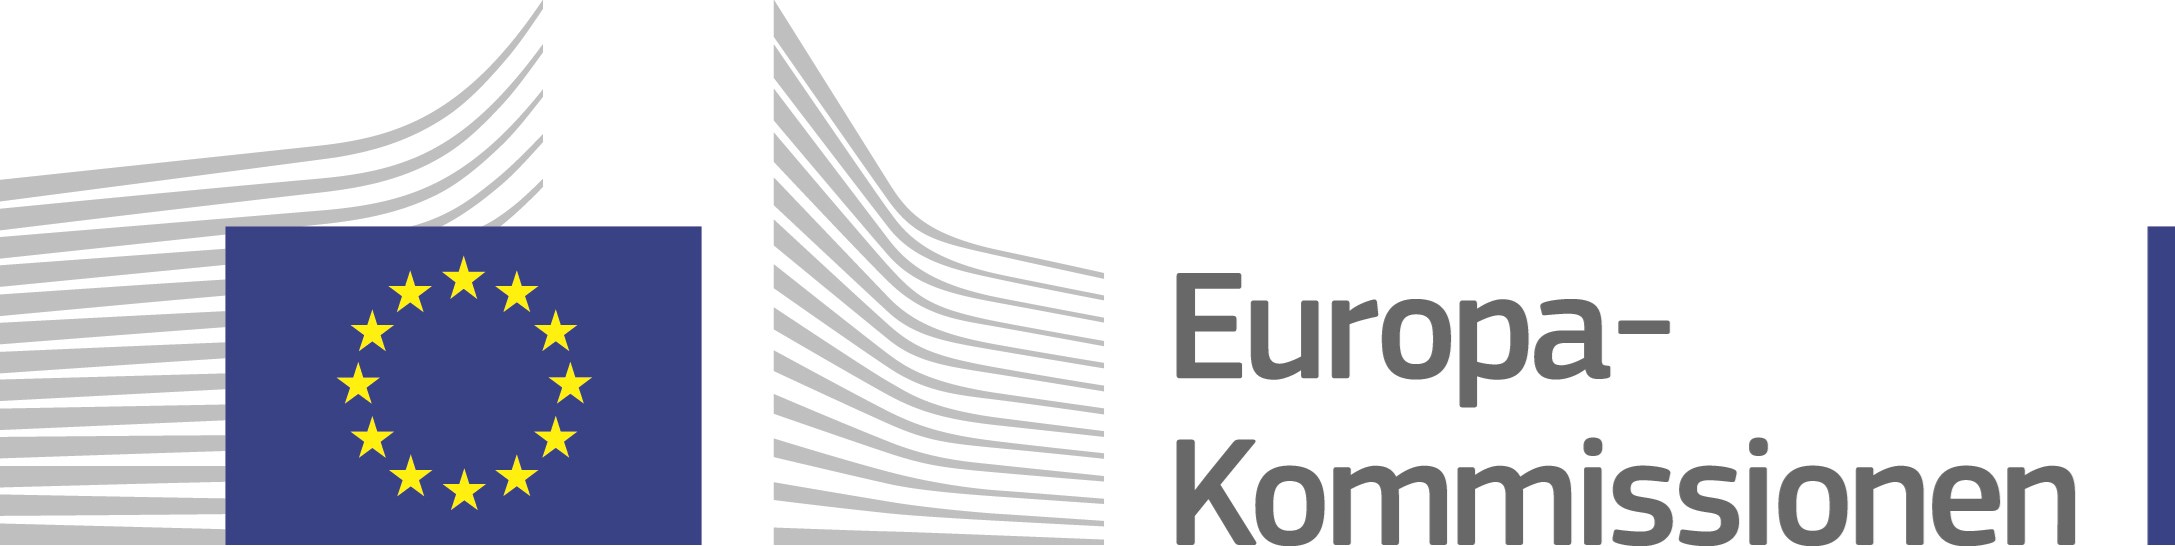 Europa-Kommissionens logo.jpg